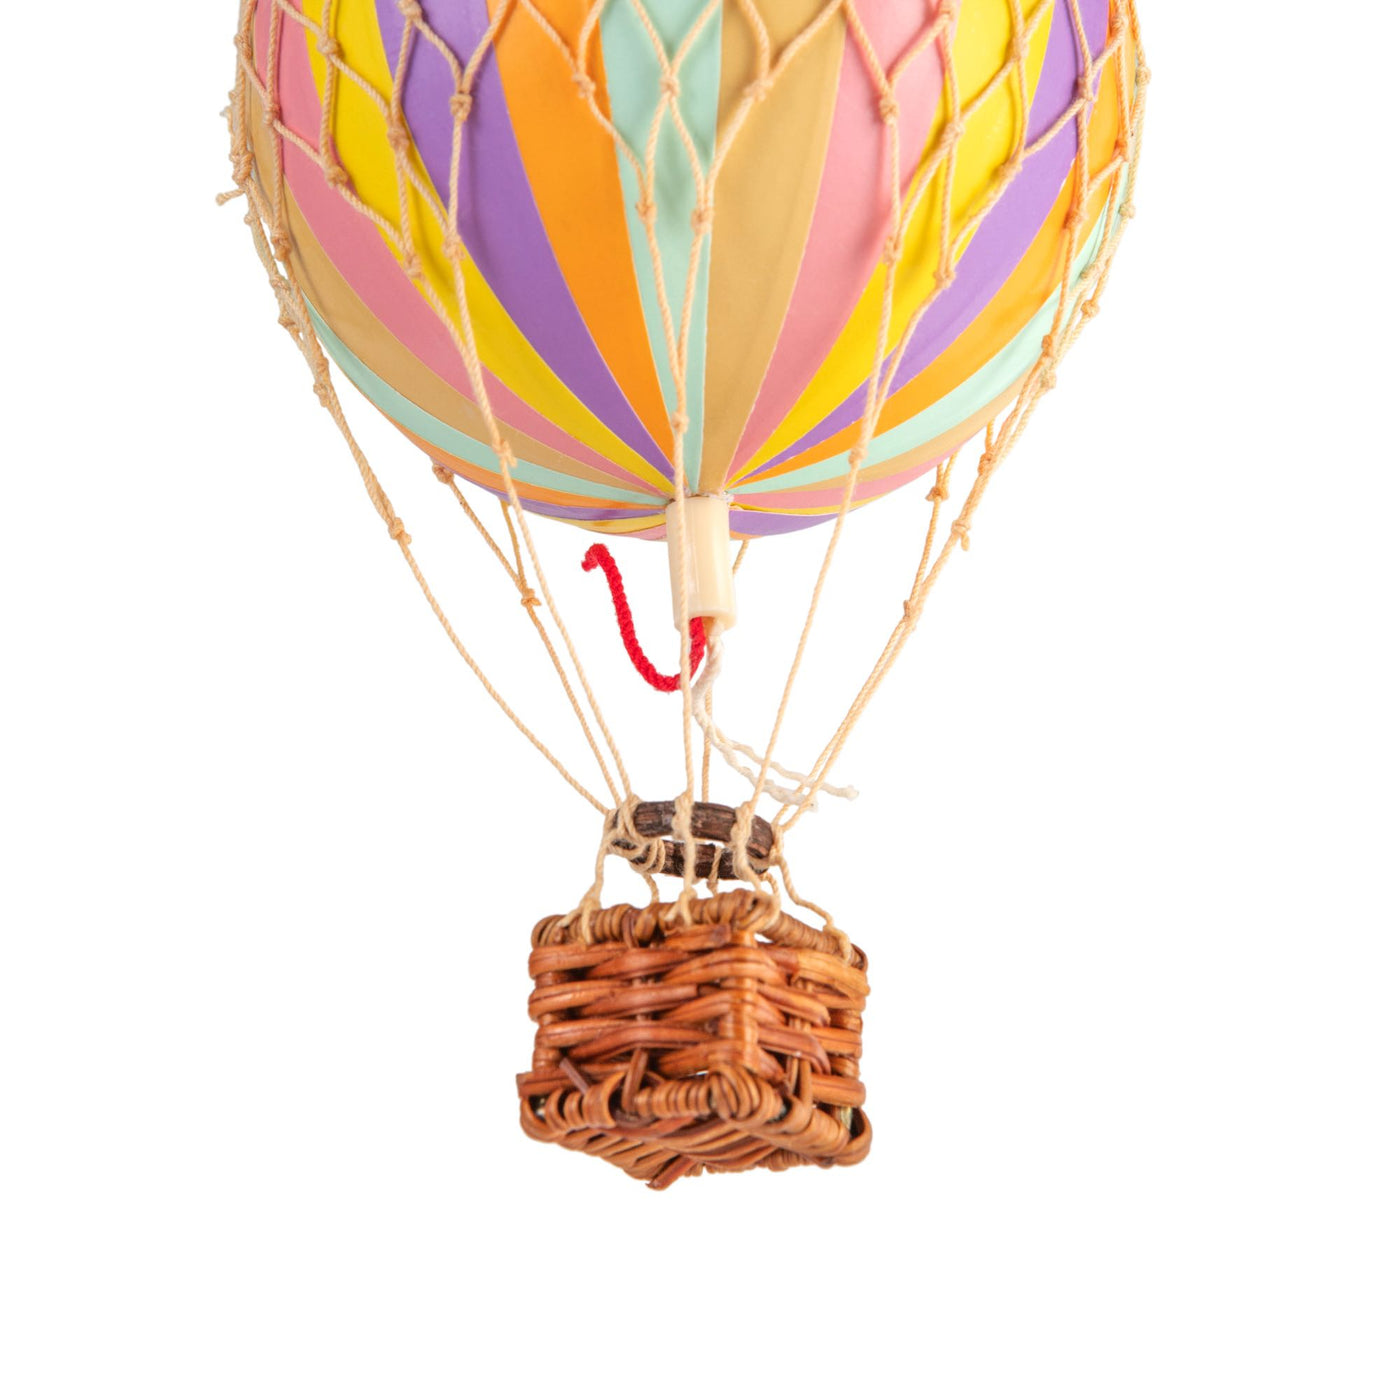 Luftballon Rainbow Pastel, 8,5 cm. Floating The Skies, Authentic Models